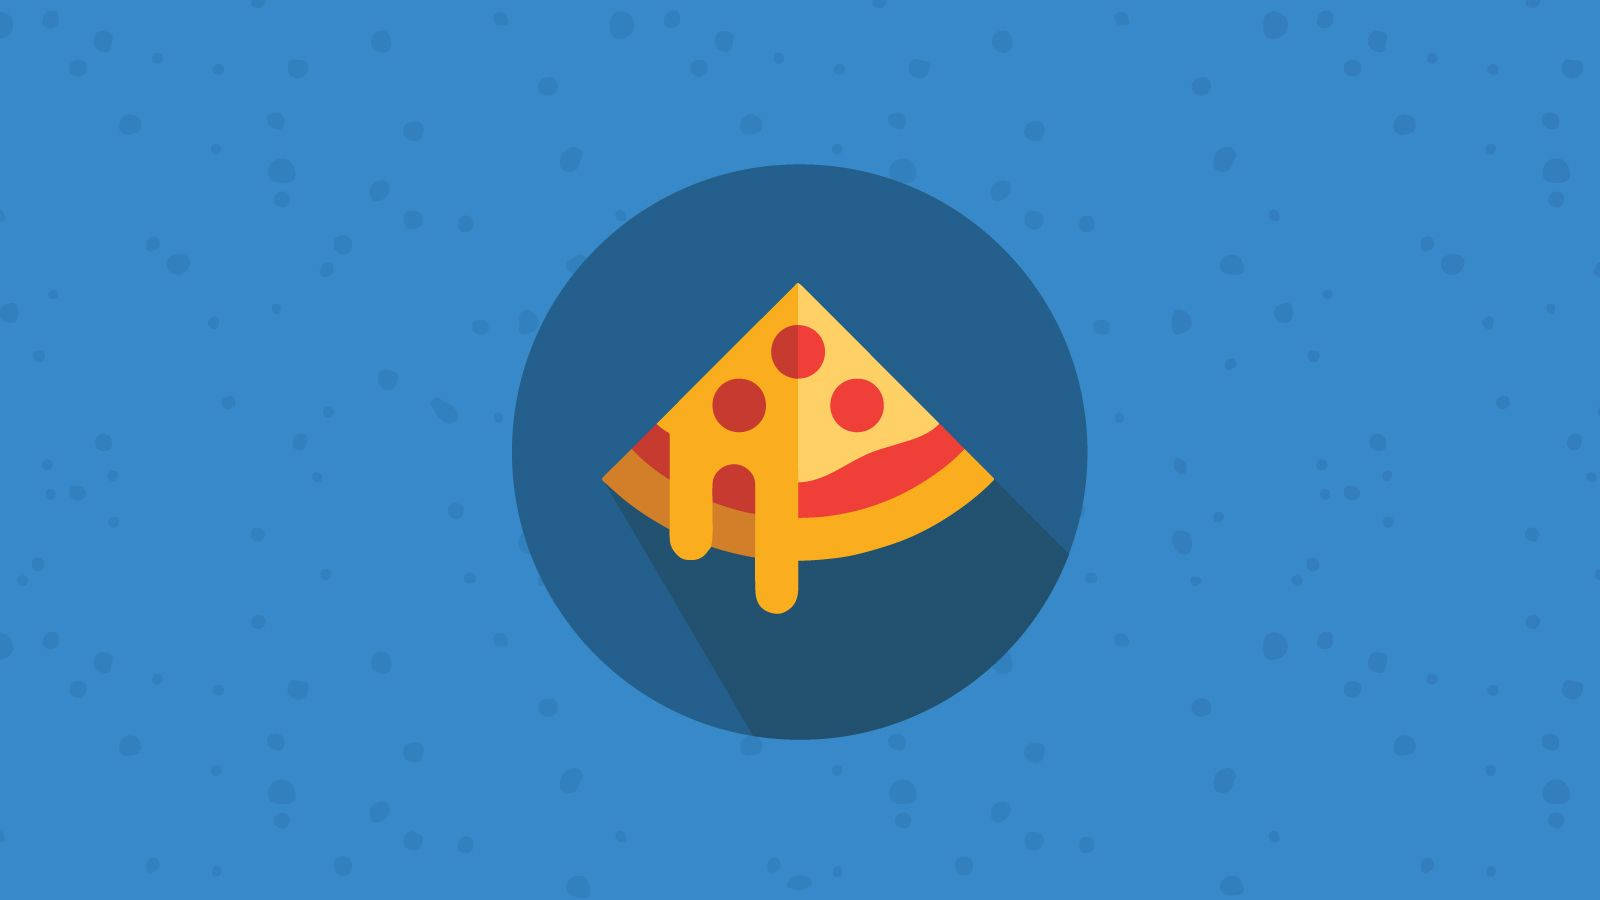 Dominos Pizza Vector Art Background